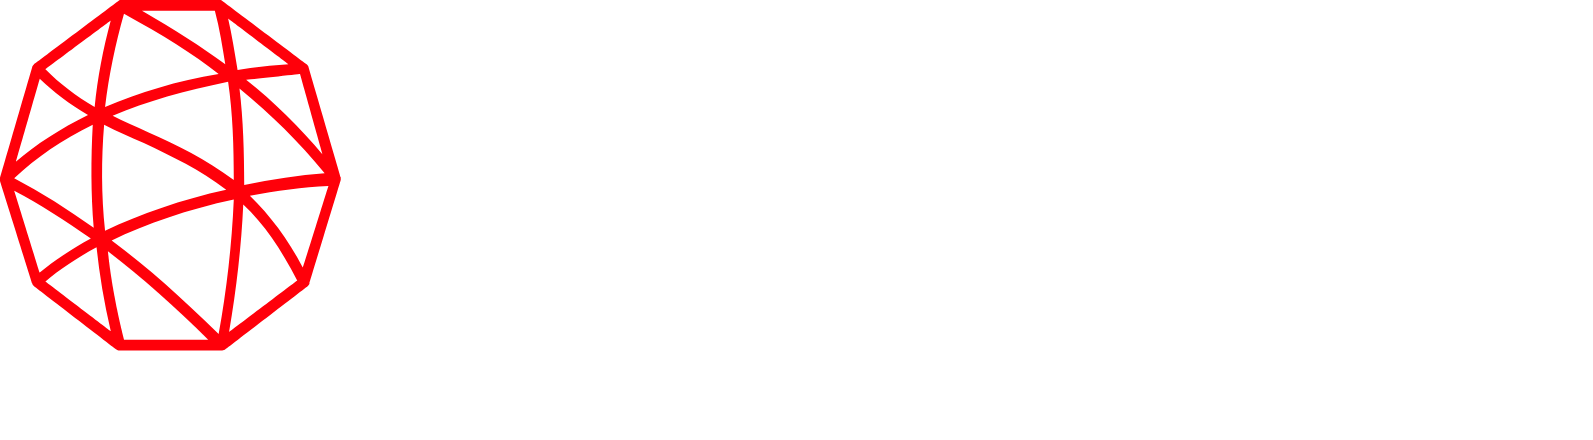 L3Harris Technologies logo large for dark backgrounds (transparent PNG)